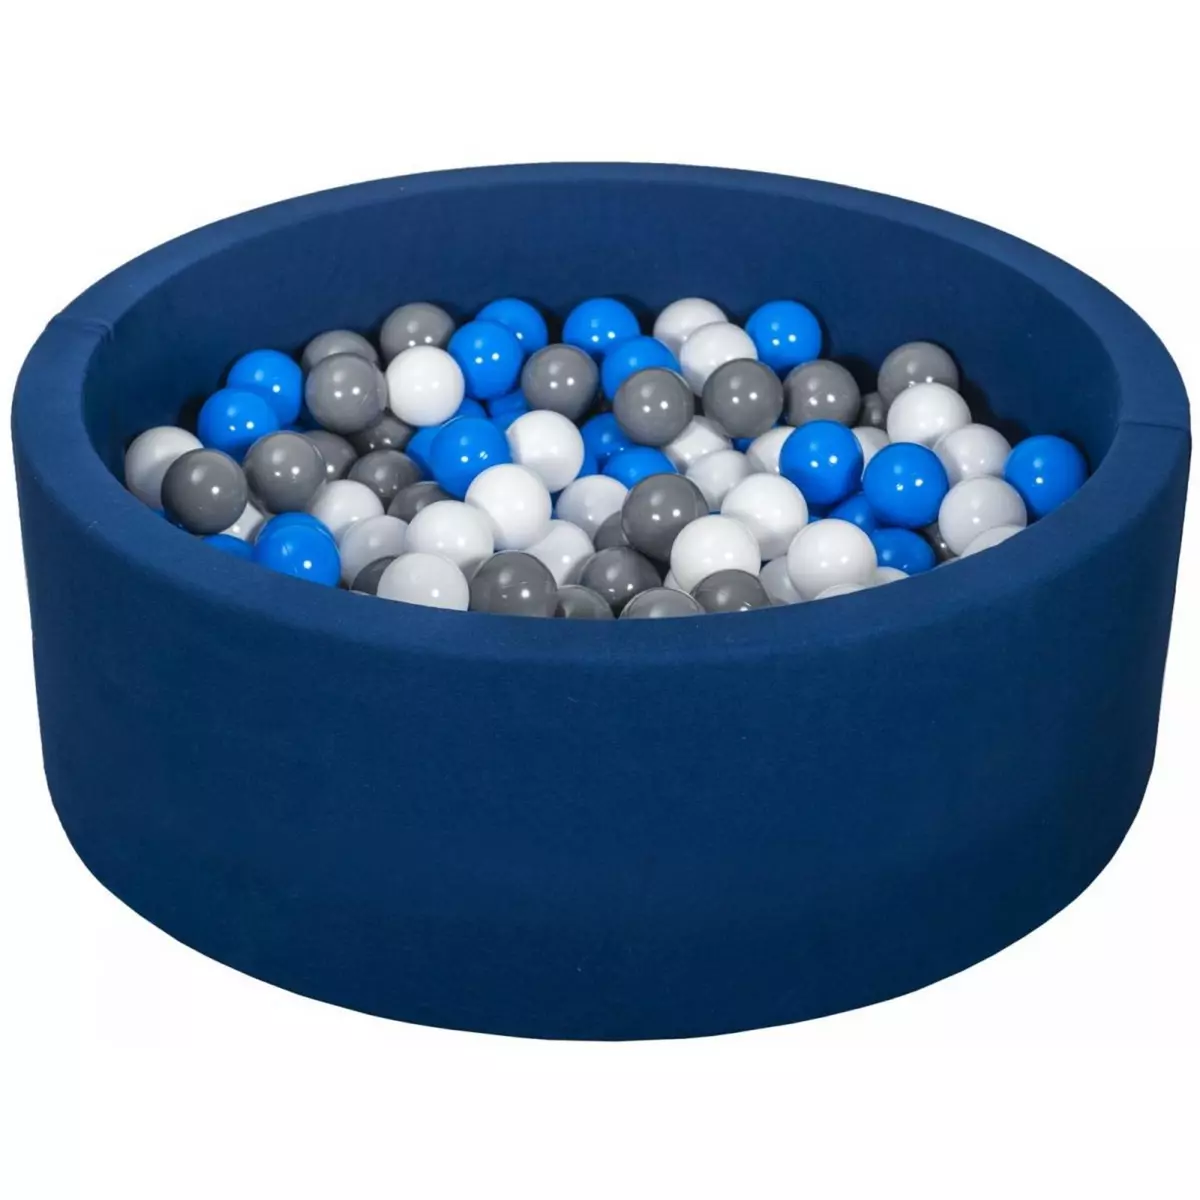  Piscine à balles blanc,bleu,gris - 300 balles bleu marine